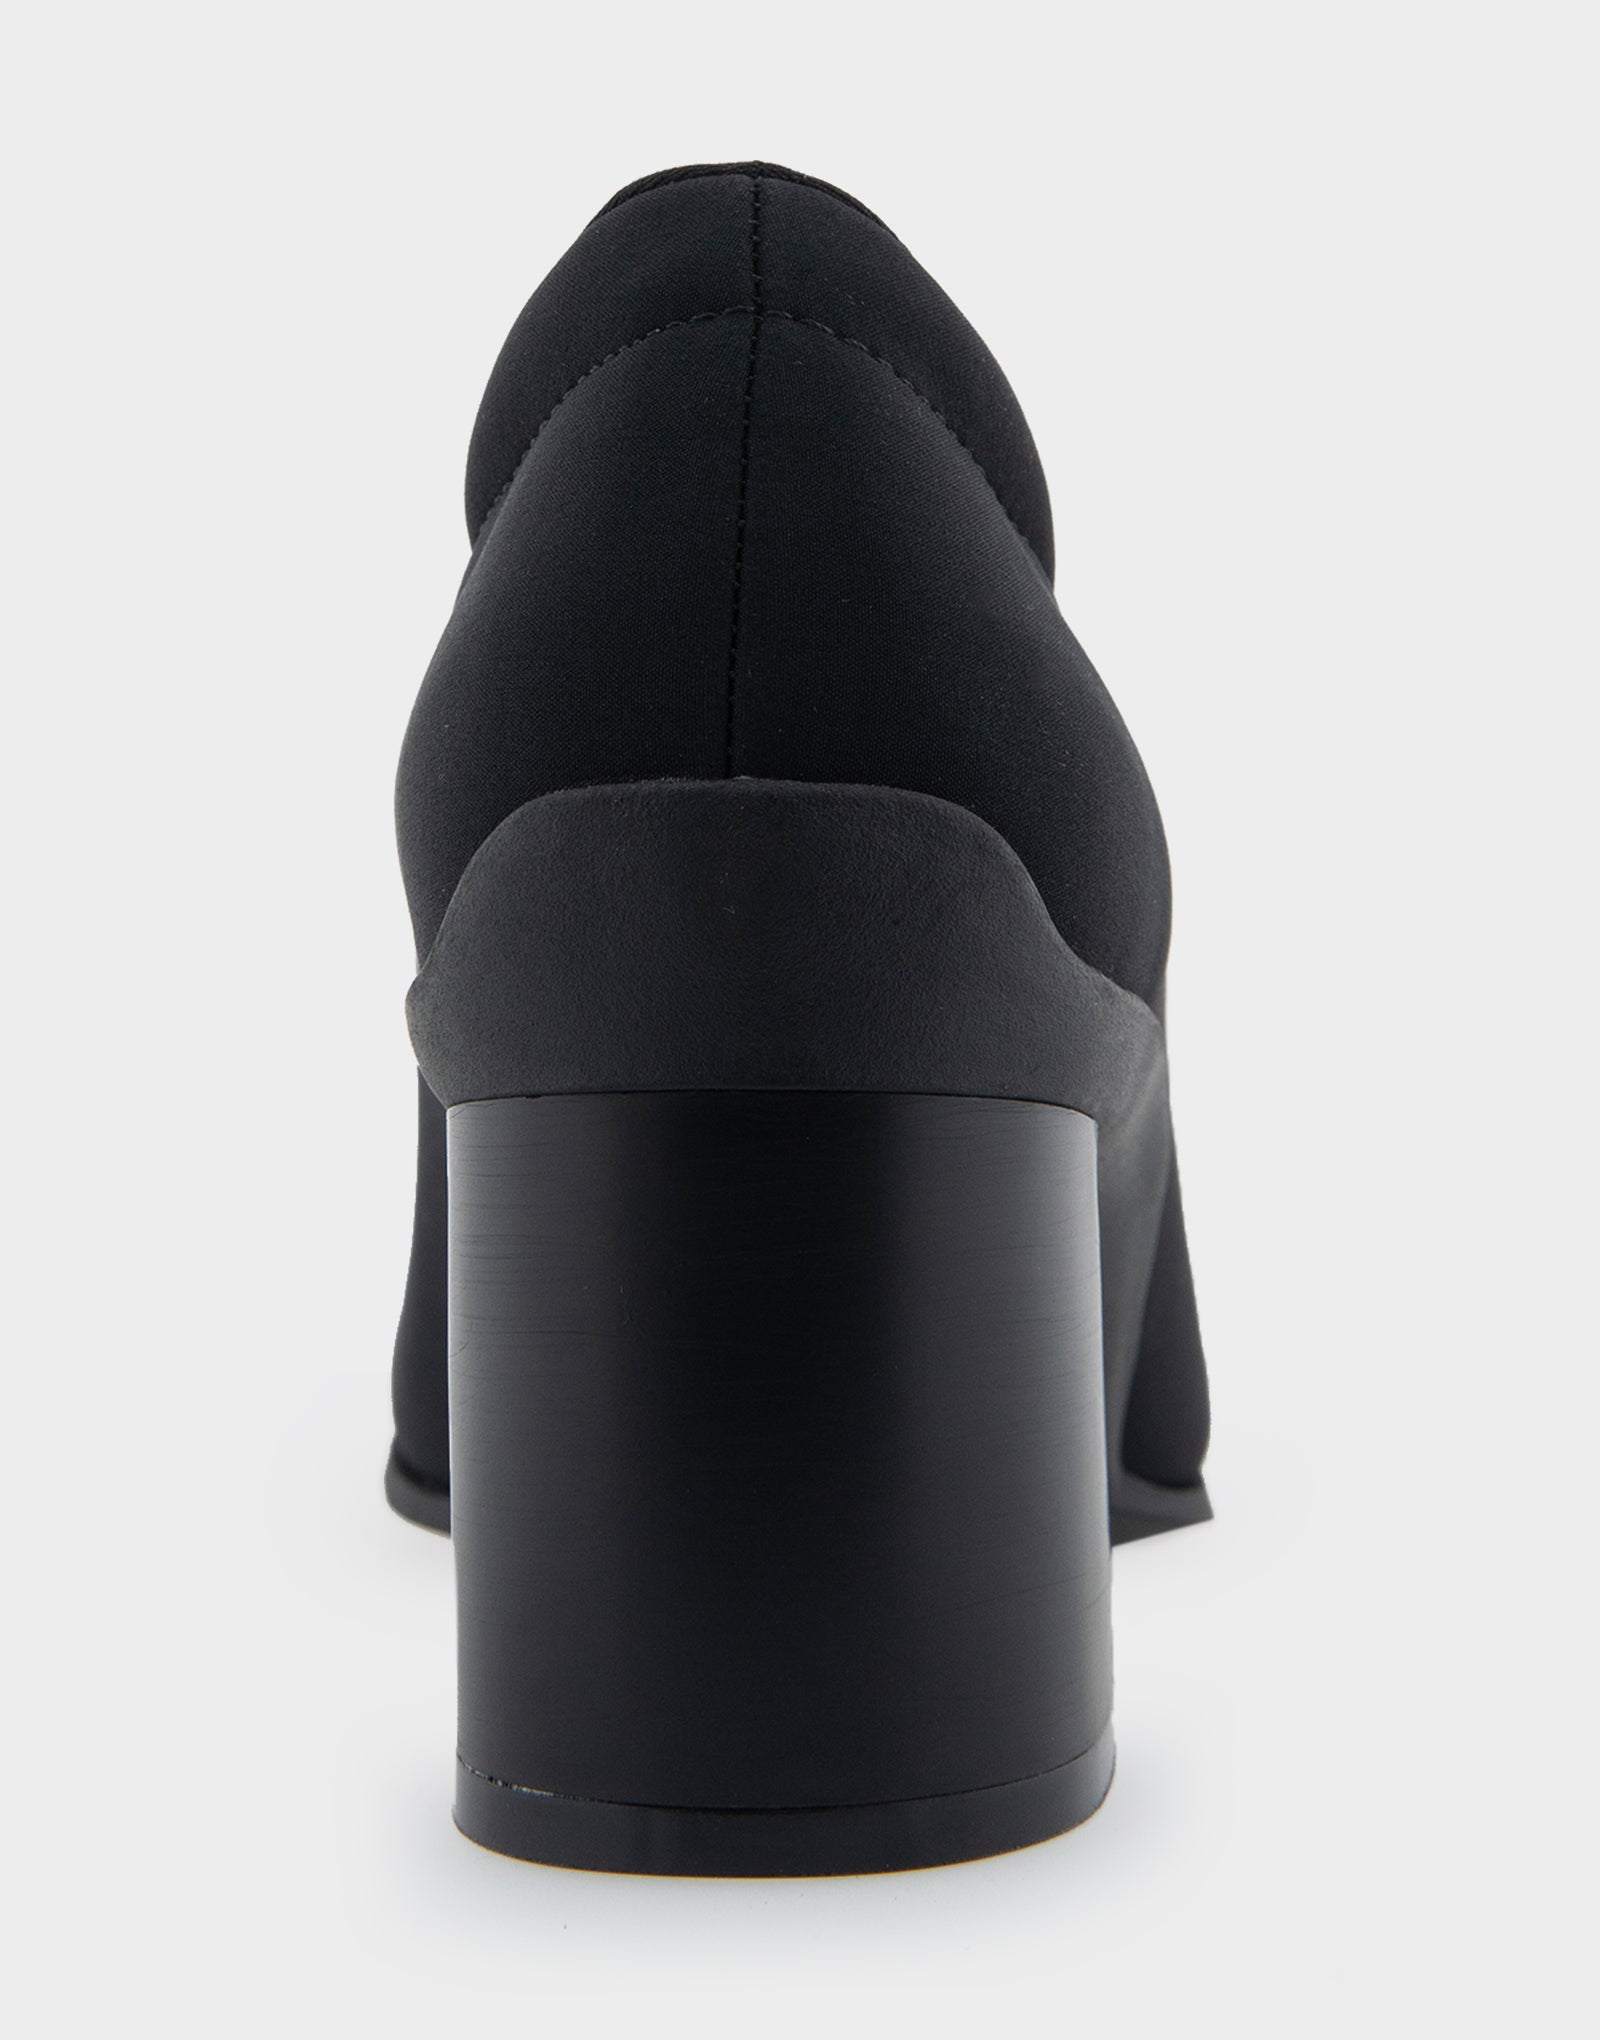 Women's Mid Heel Pump in Black Stretch Fabric